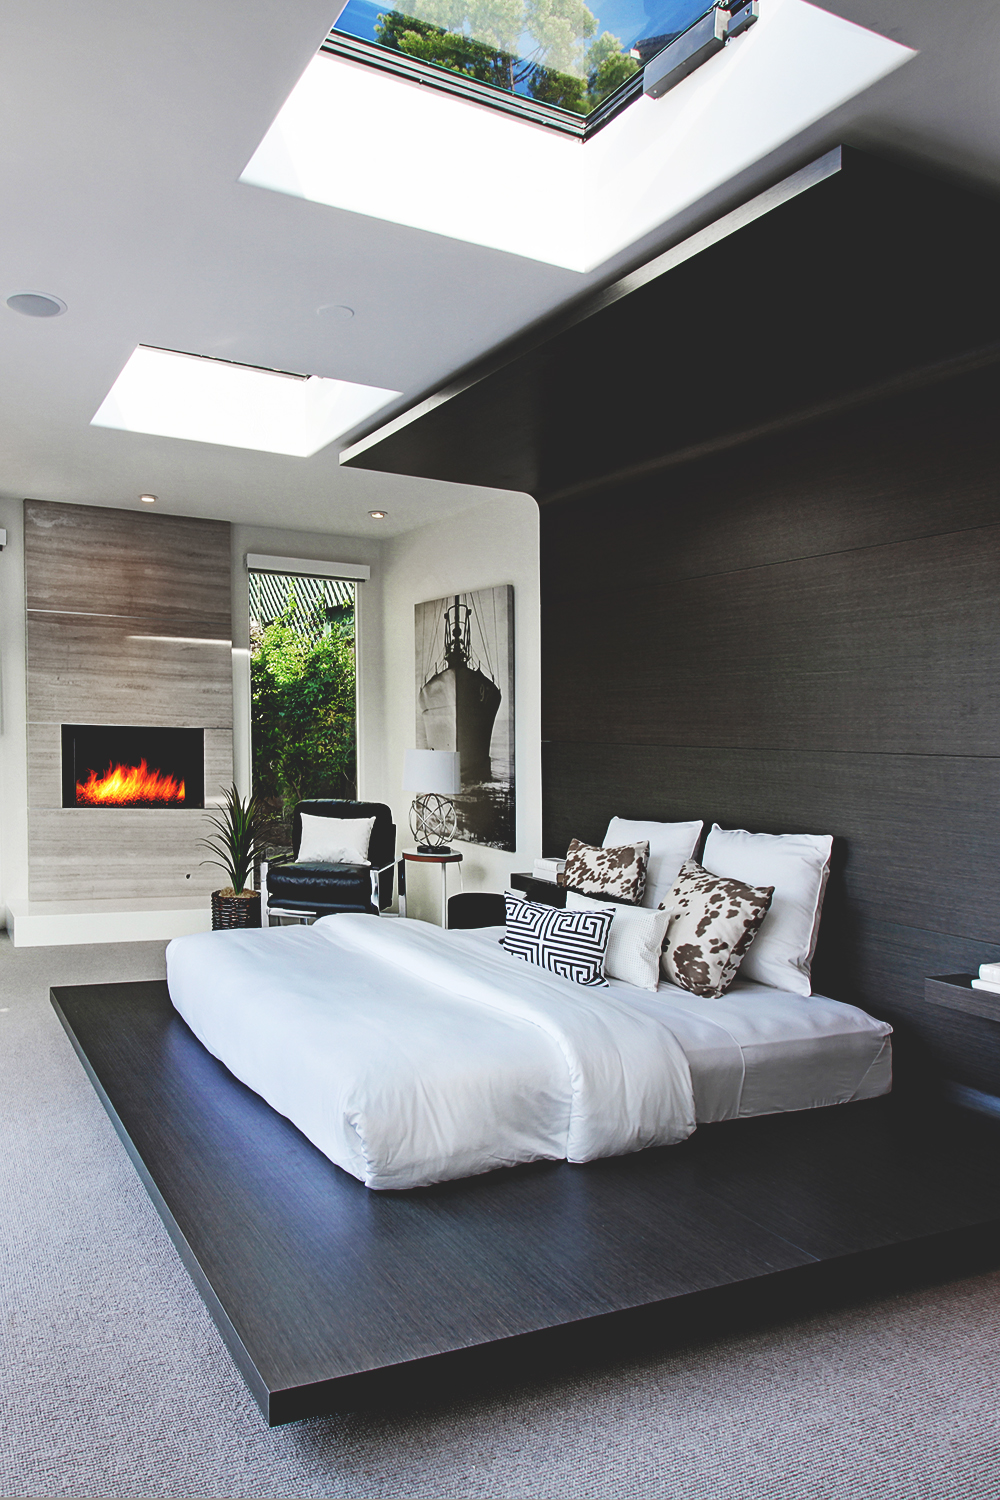 Bedroom_ideas: 10 Modern & Stylish Designs